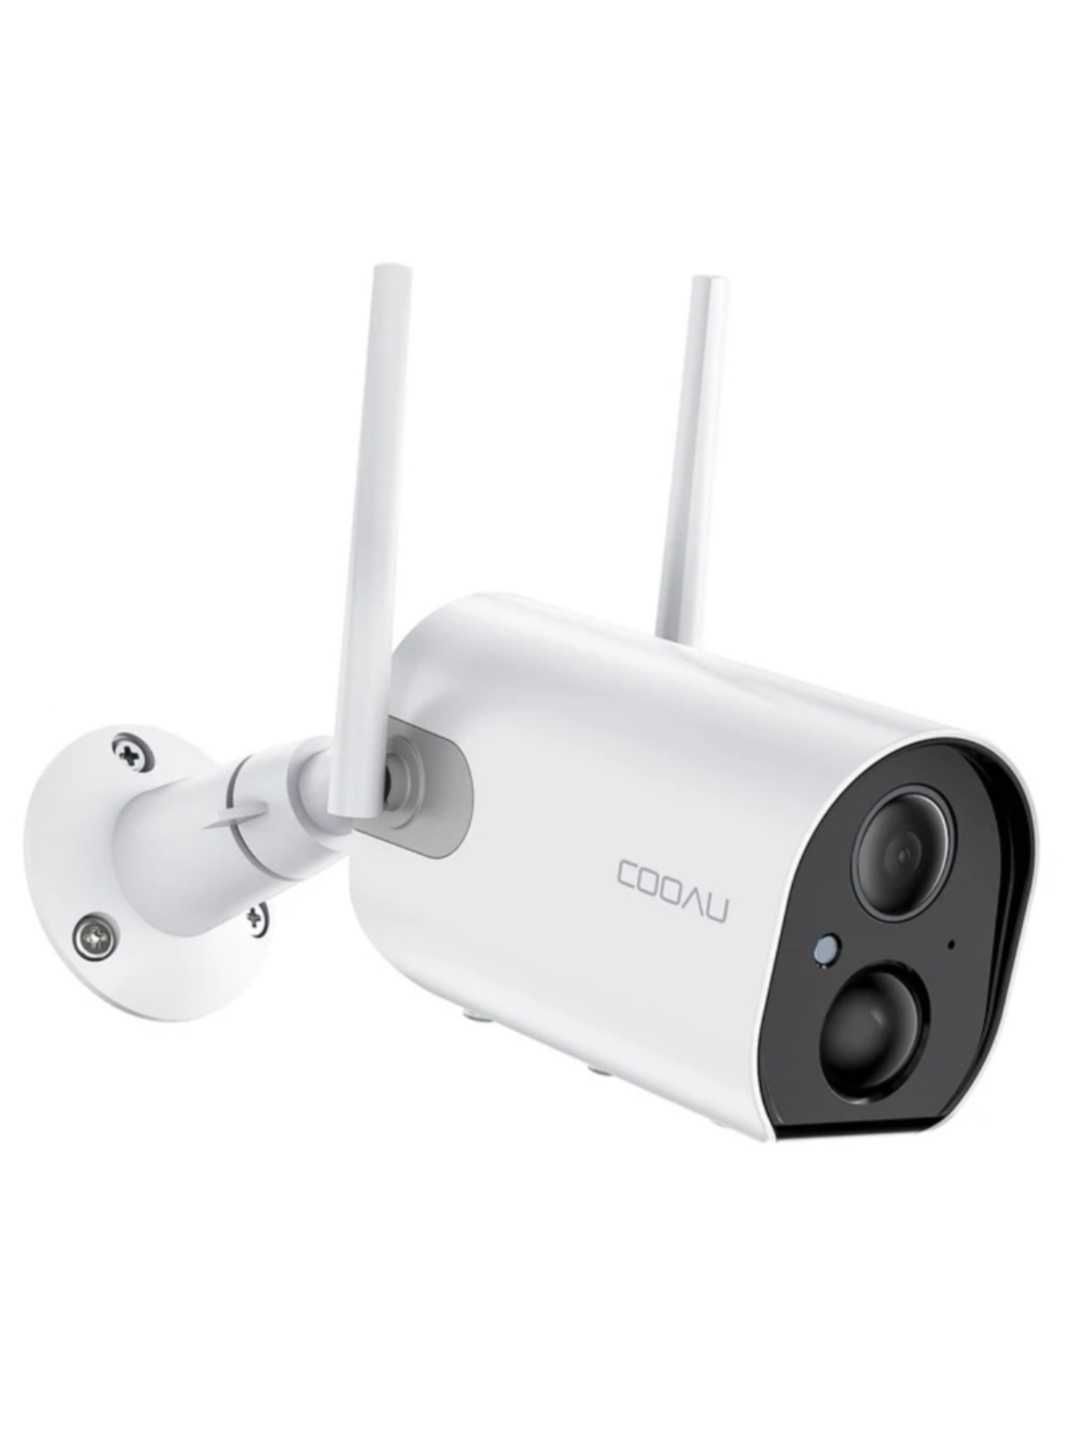 Security camera COOAU ZS-GQ3, IP Wireless